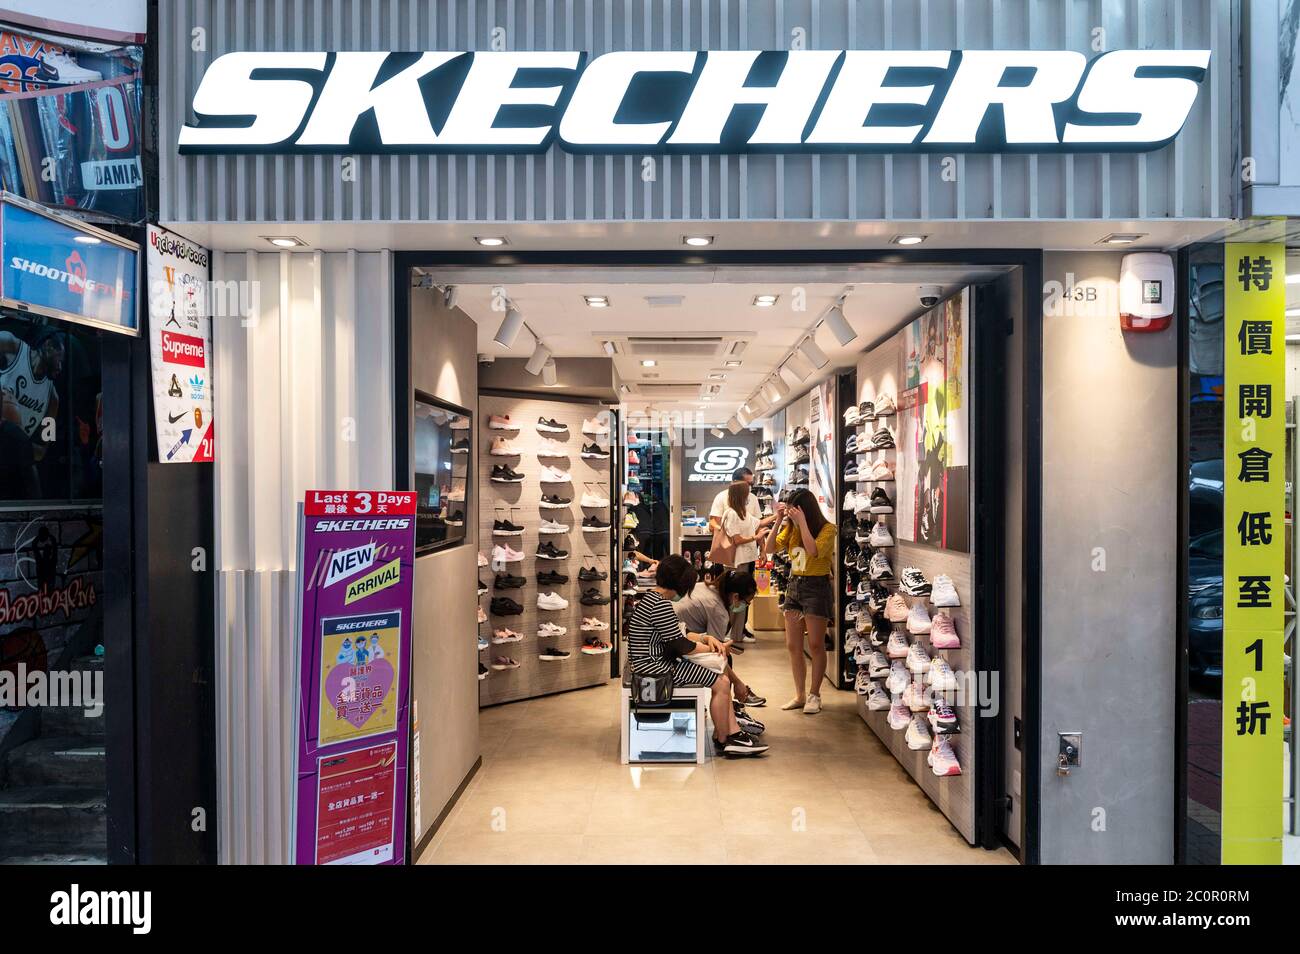 Skechers news